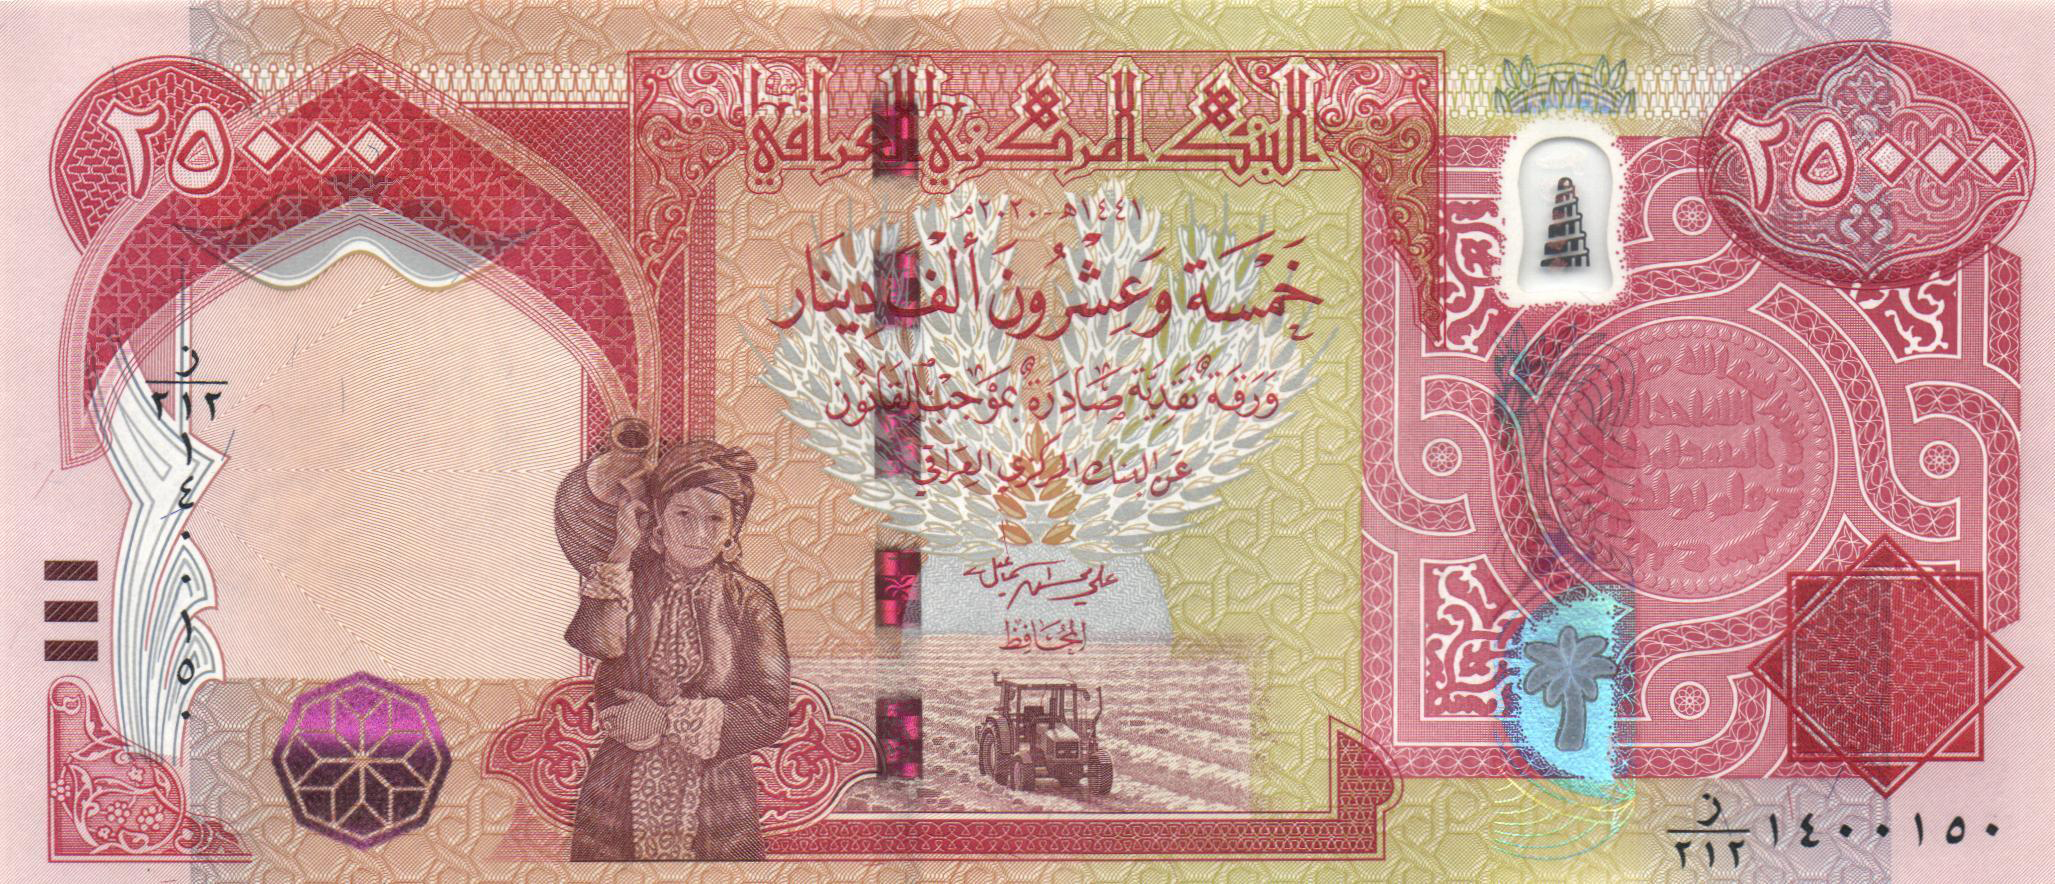 Iraq_CBI_25000_dinars_2018.00.00_B356d_P